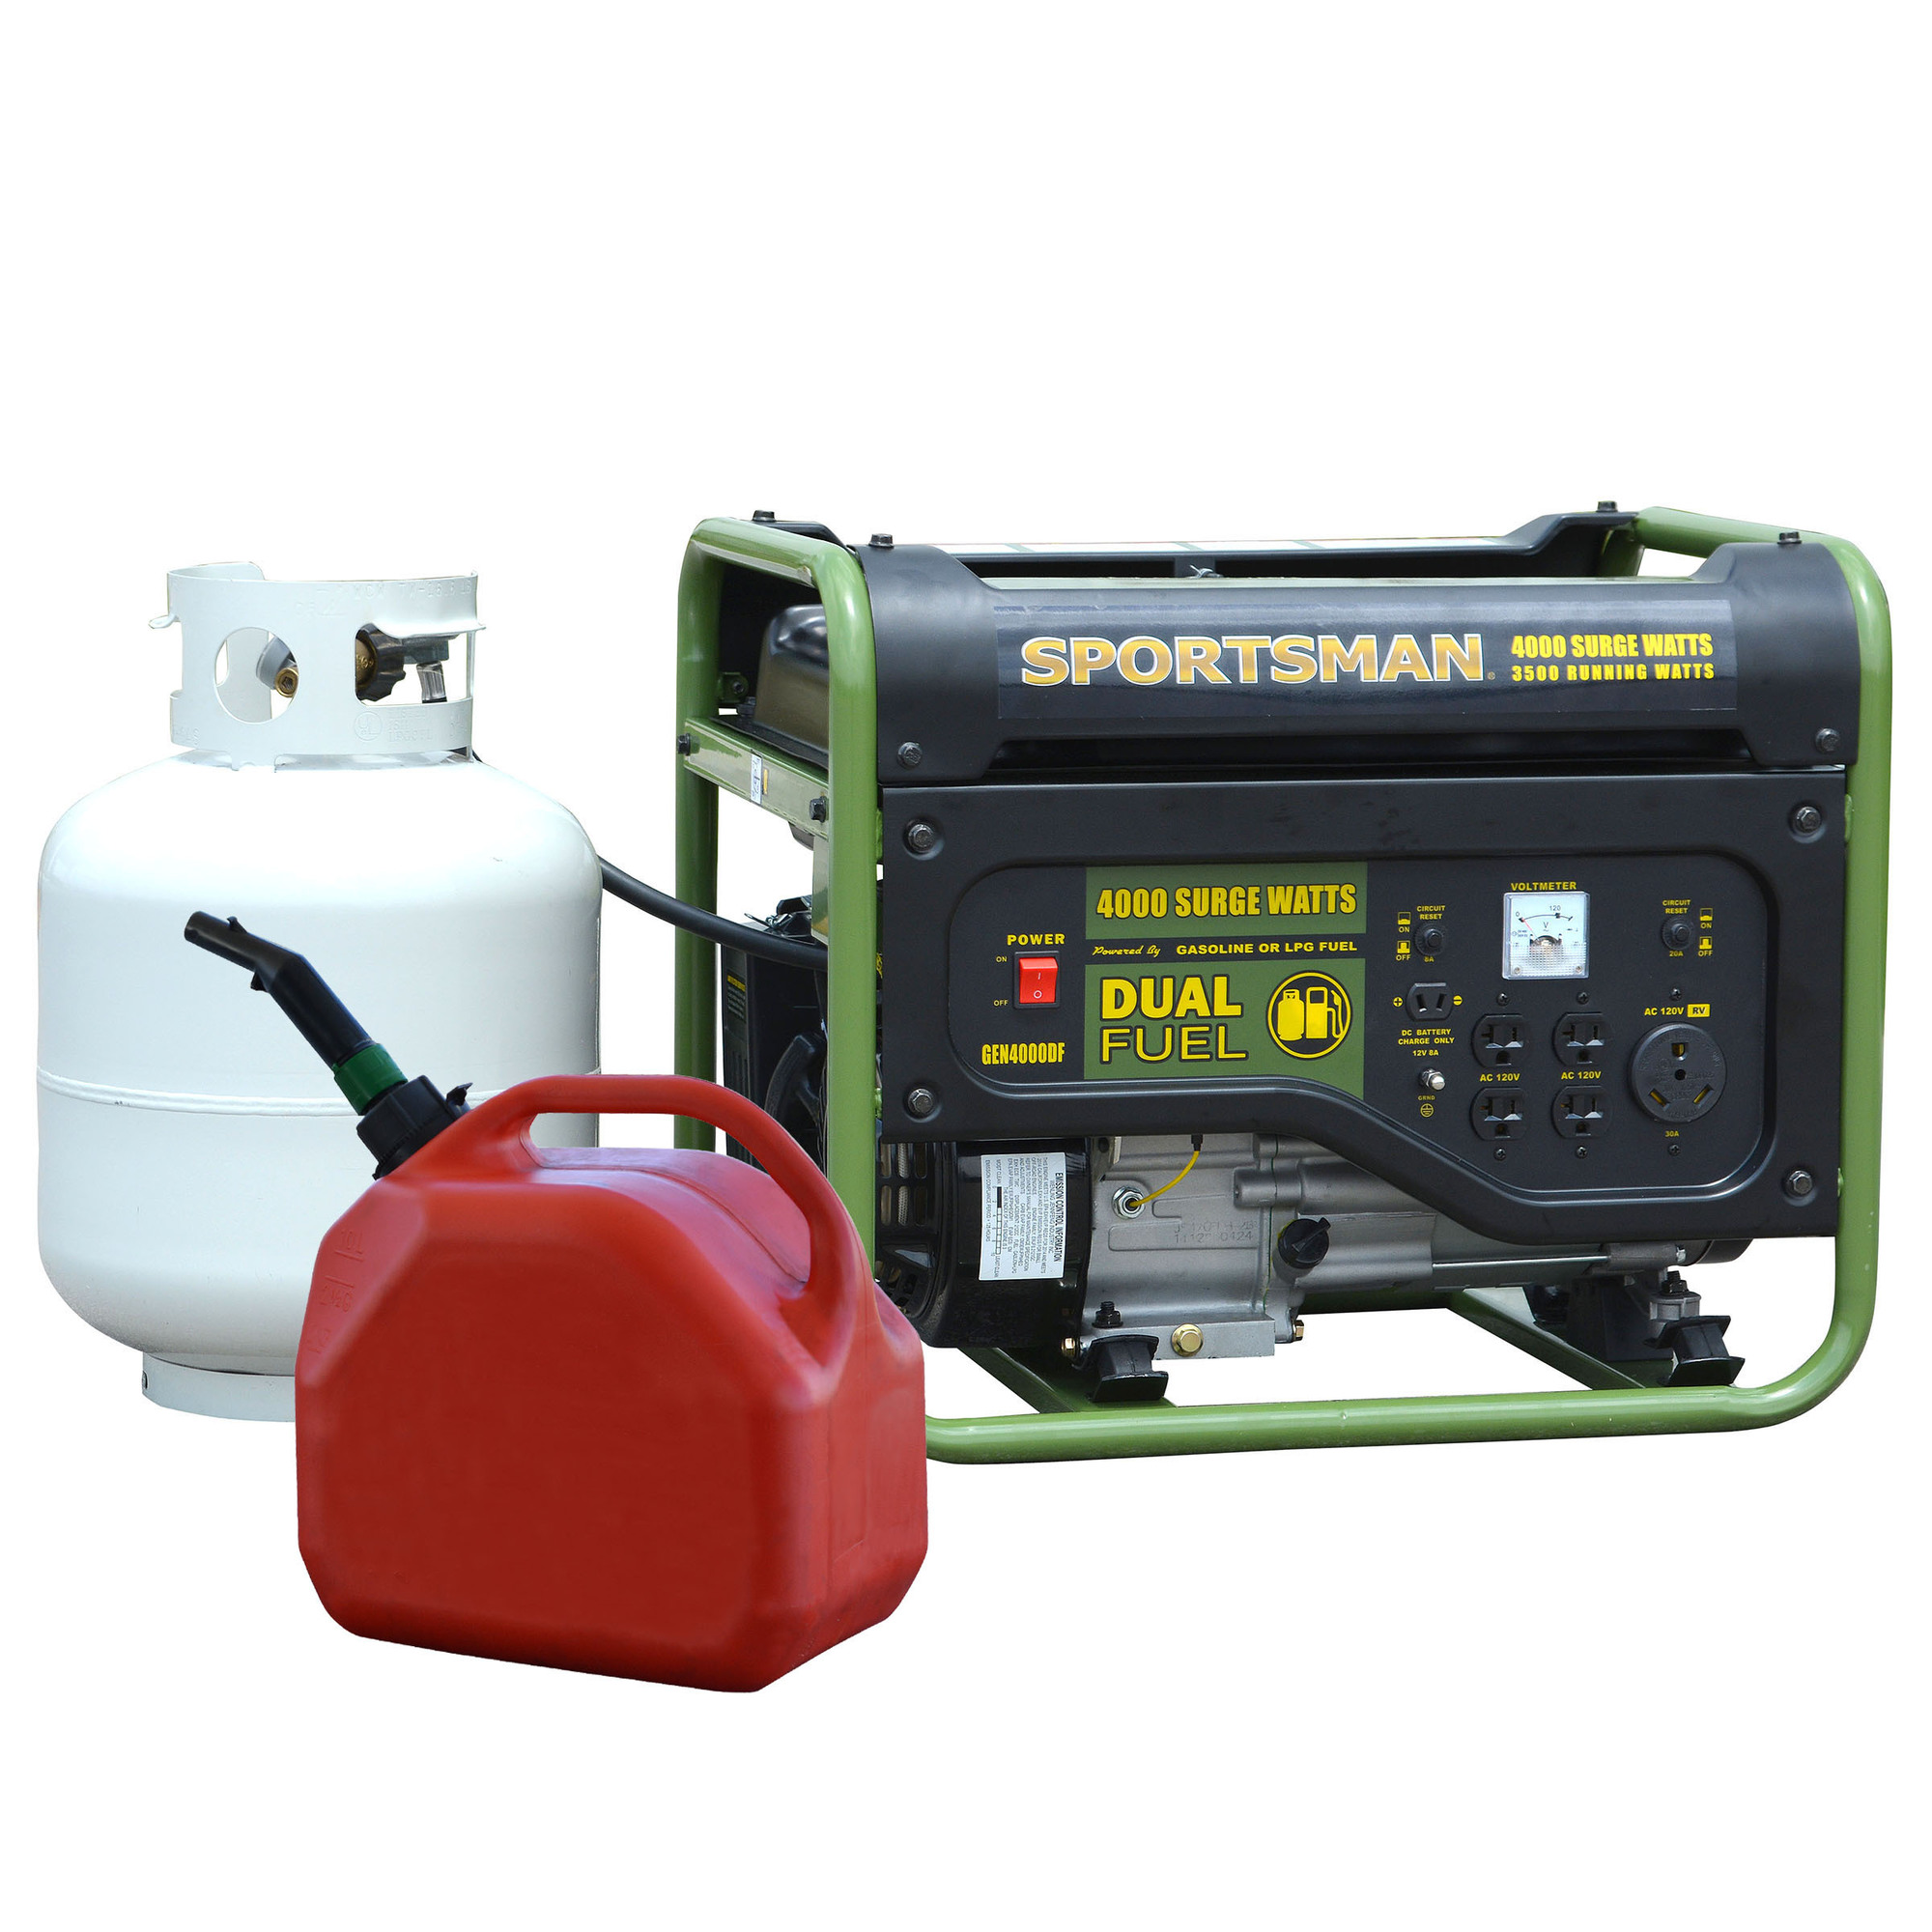 Sportsman, 4000 Watt Dual Fuel Generator, Surge Watts 4000 Voltage 120 Model GEN4000DF